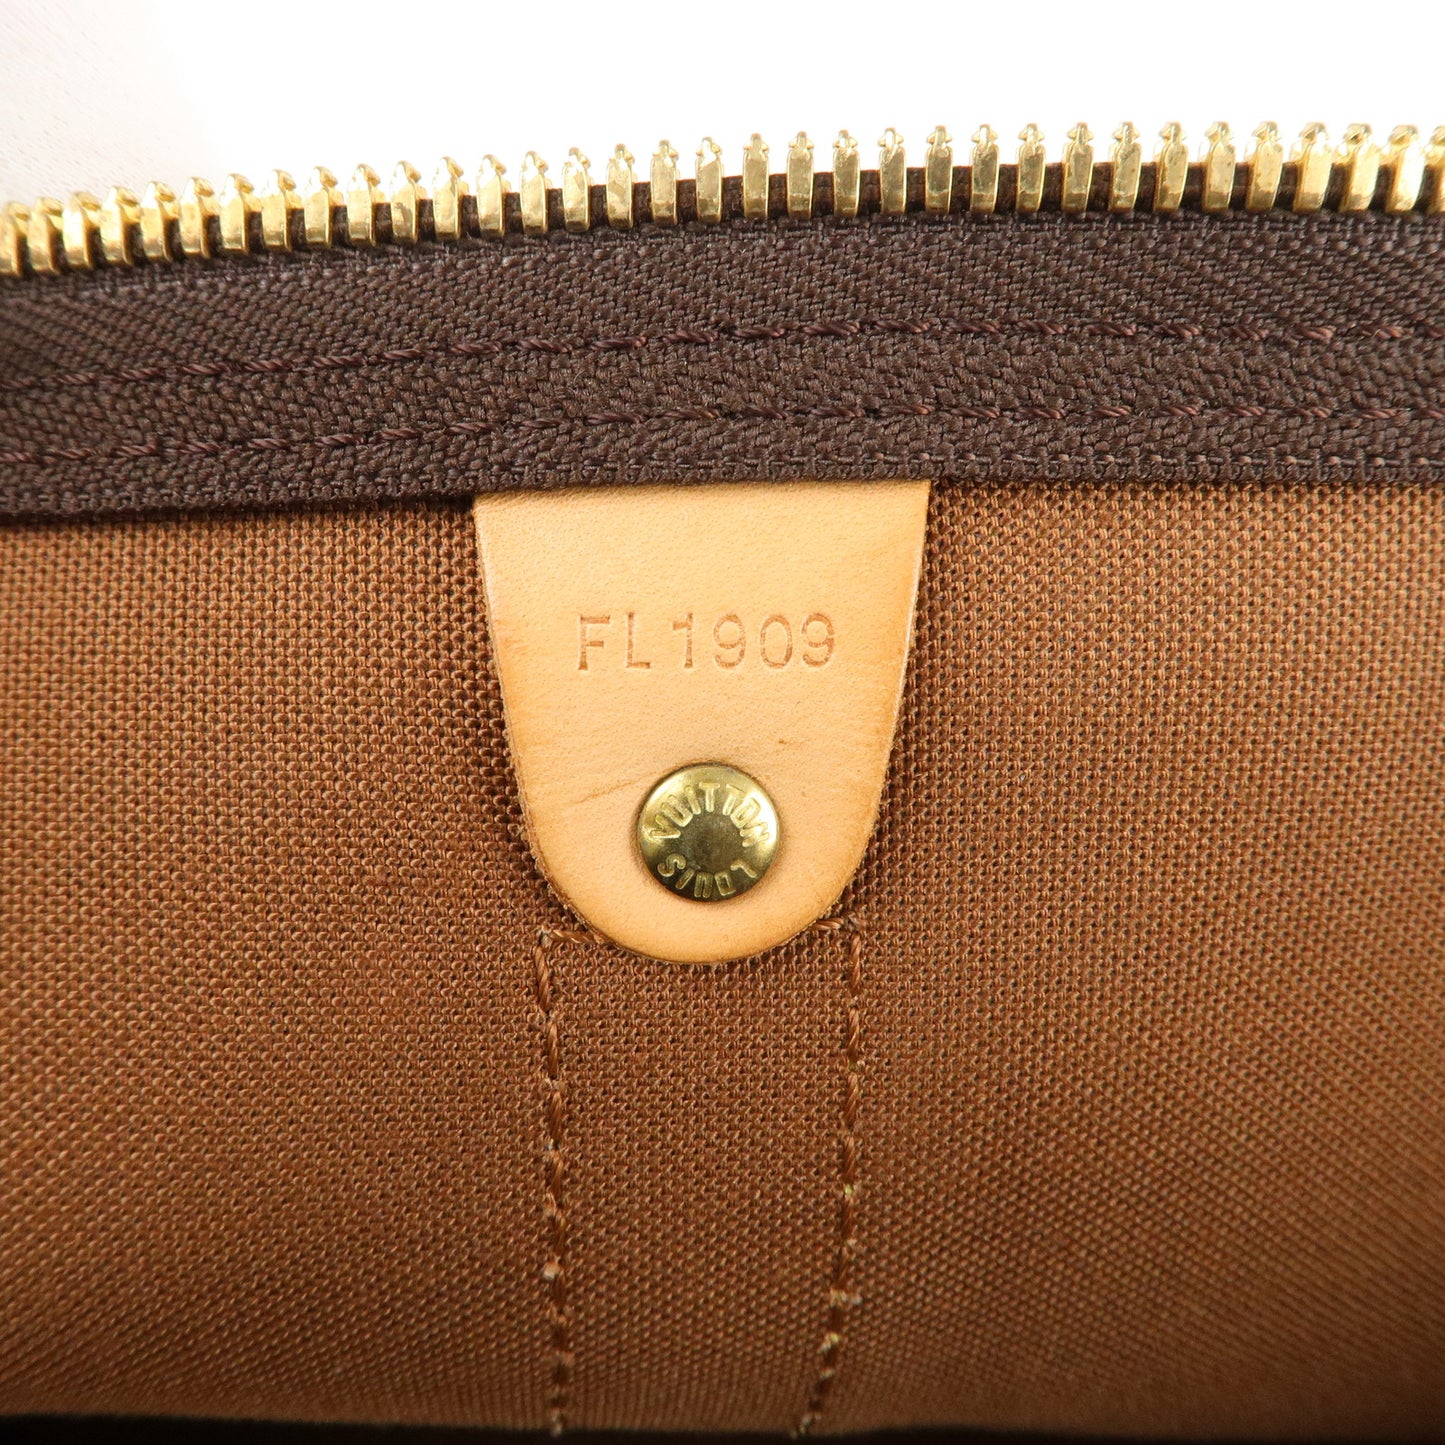 AuthenticLouis Vuitton Monogram Keep All 55 Boston Bag Brown M41424